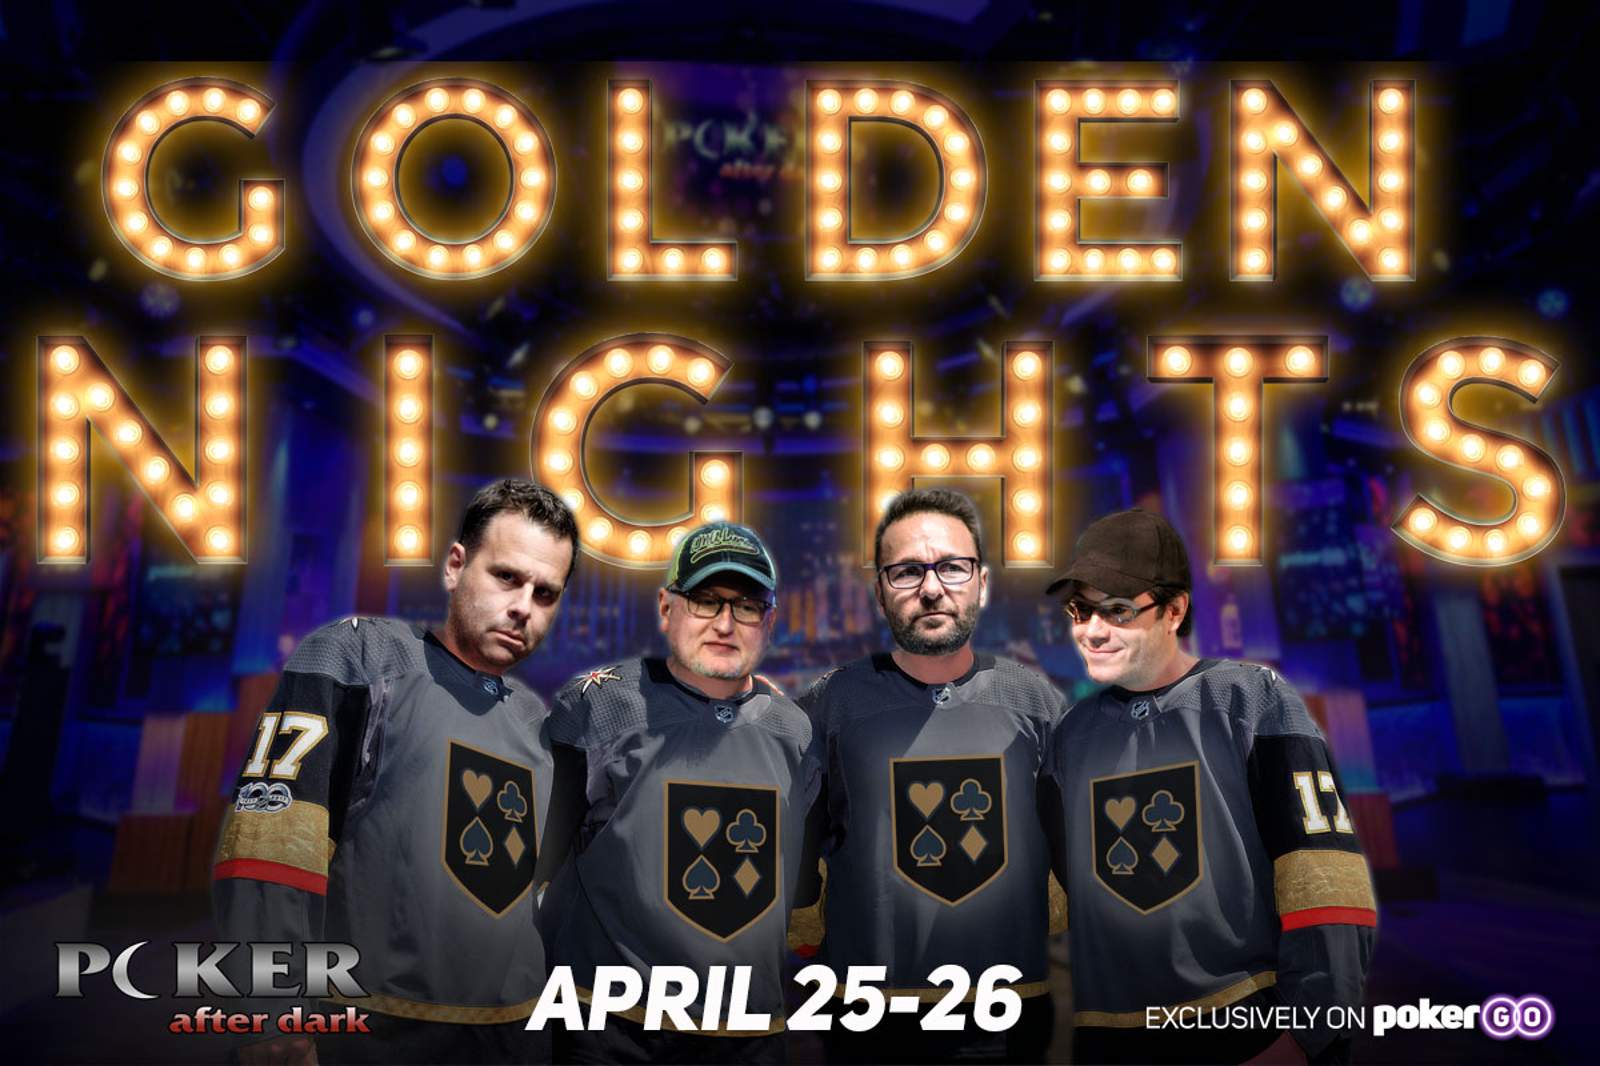 Jamie Gold Returns to Poker After Dark for "Golden Nights" Week